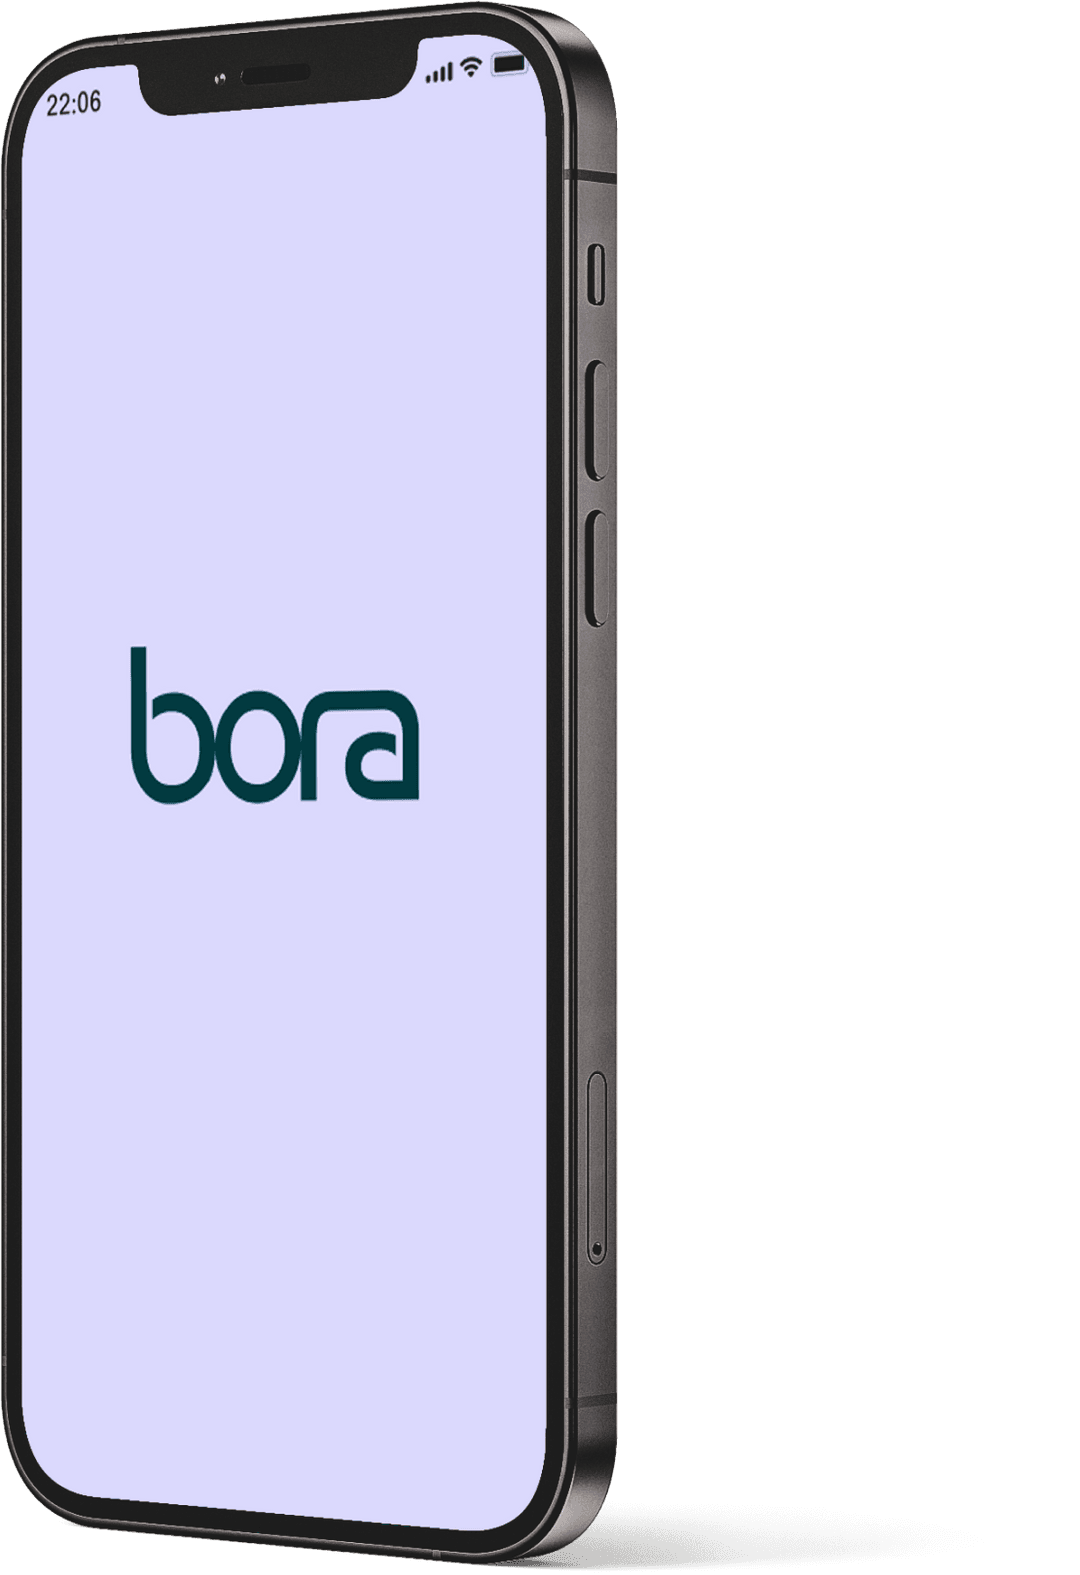 Smartphone with BORA logo